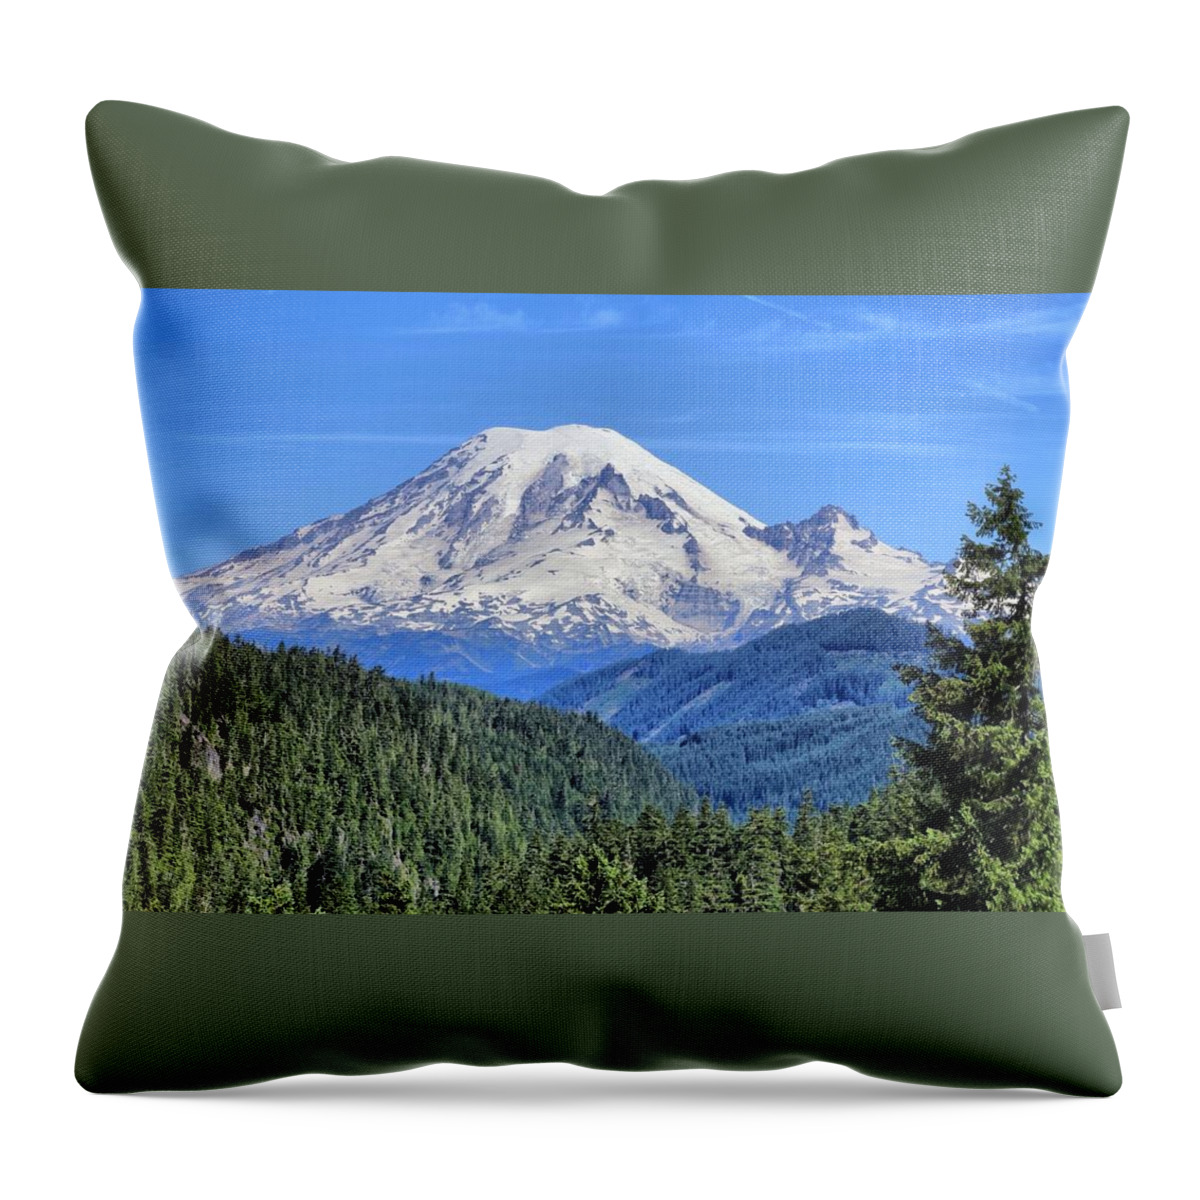 Mount Rainier Viewpoint Throw Pillow featuring the photograph Mount Rainier Viewpoint by Lynn Hopwood